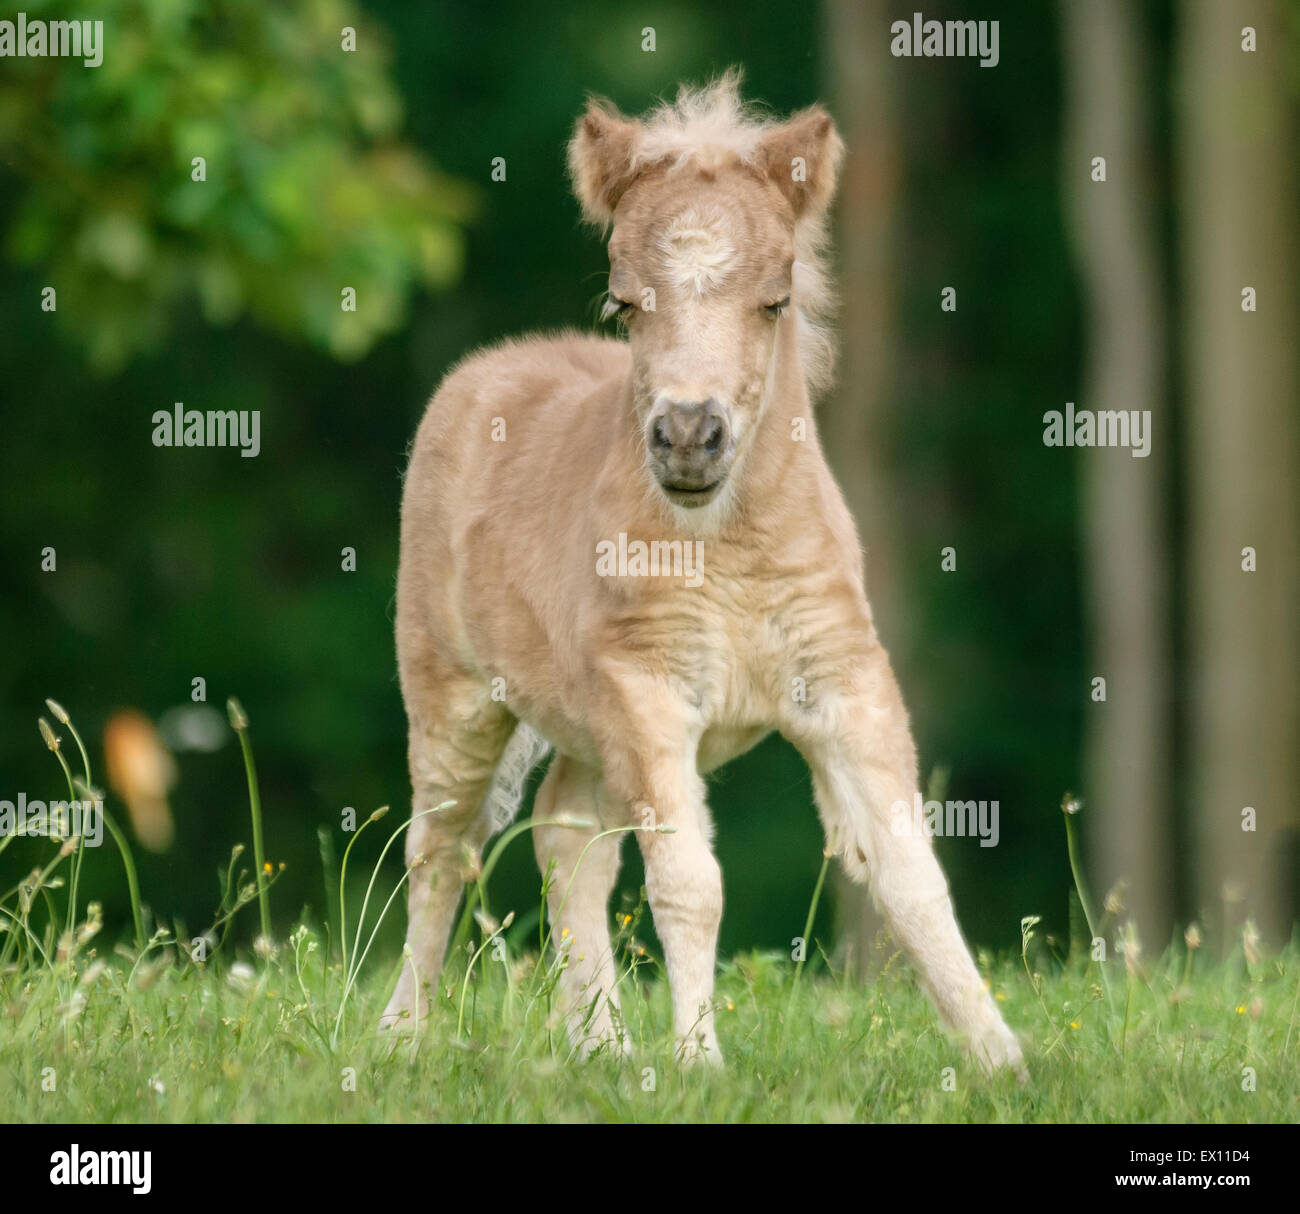 Miniature Horse foal Stock Photo